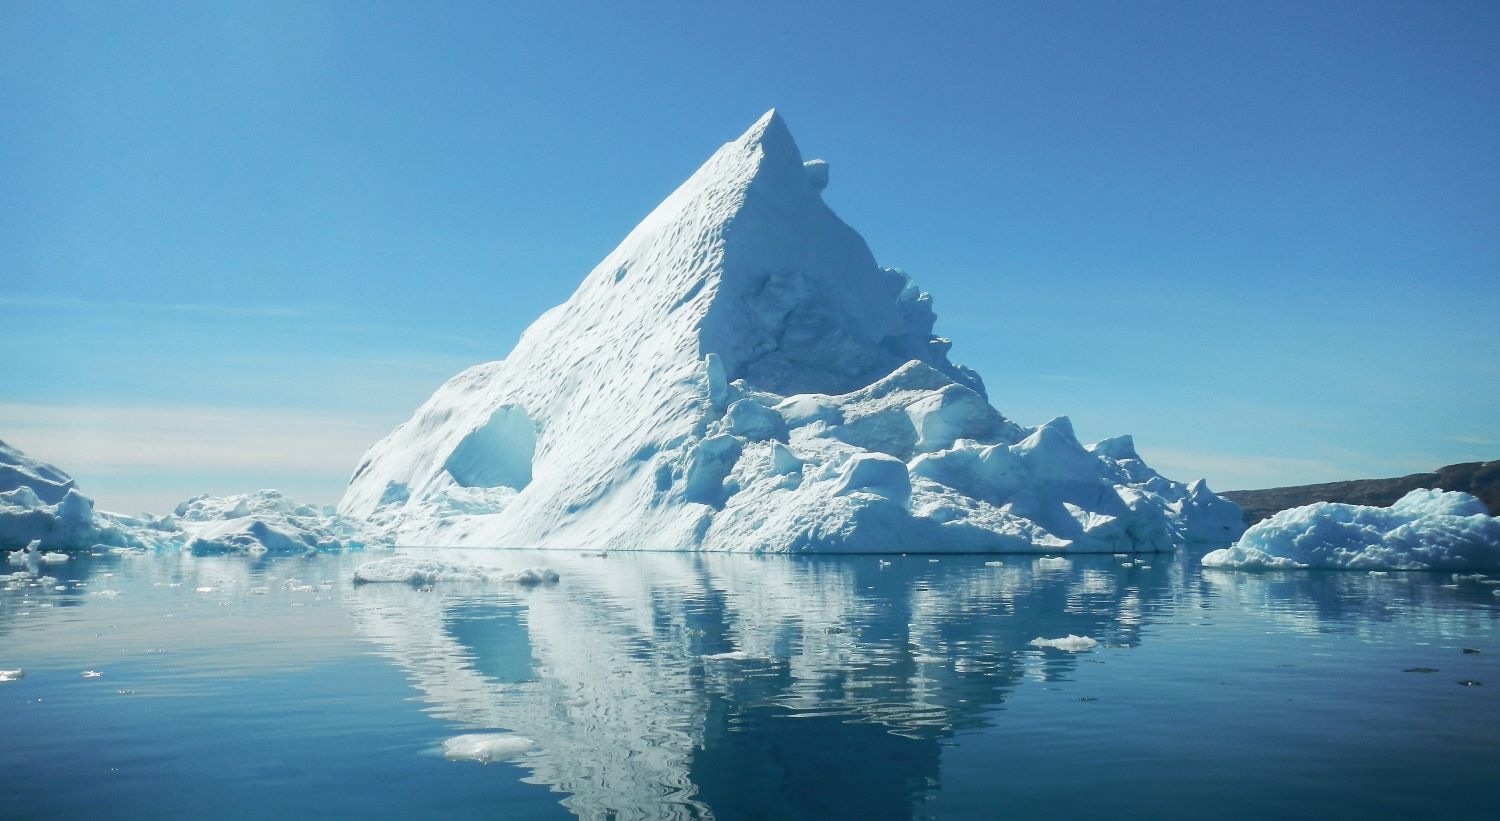 An iceberg in the ocean.